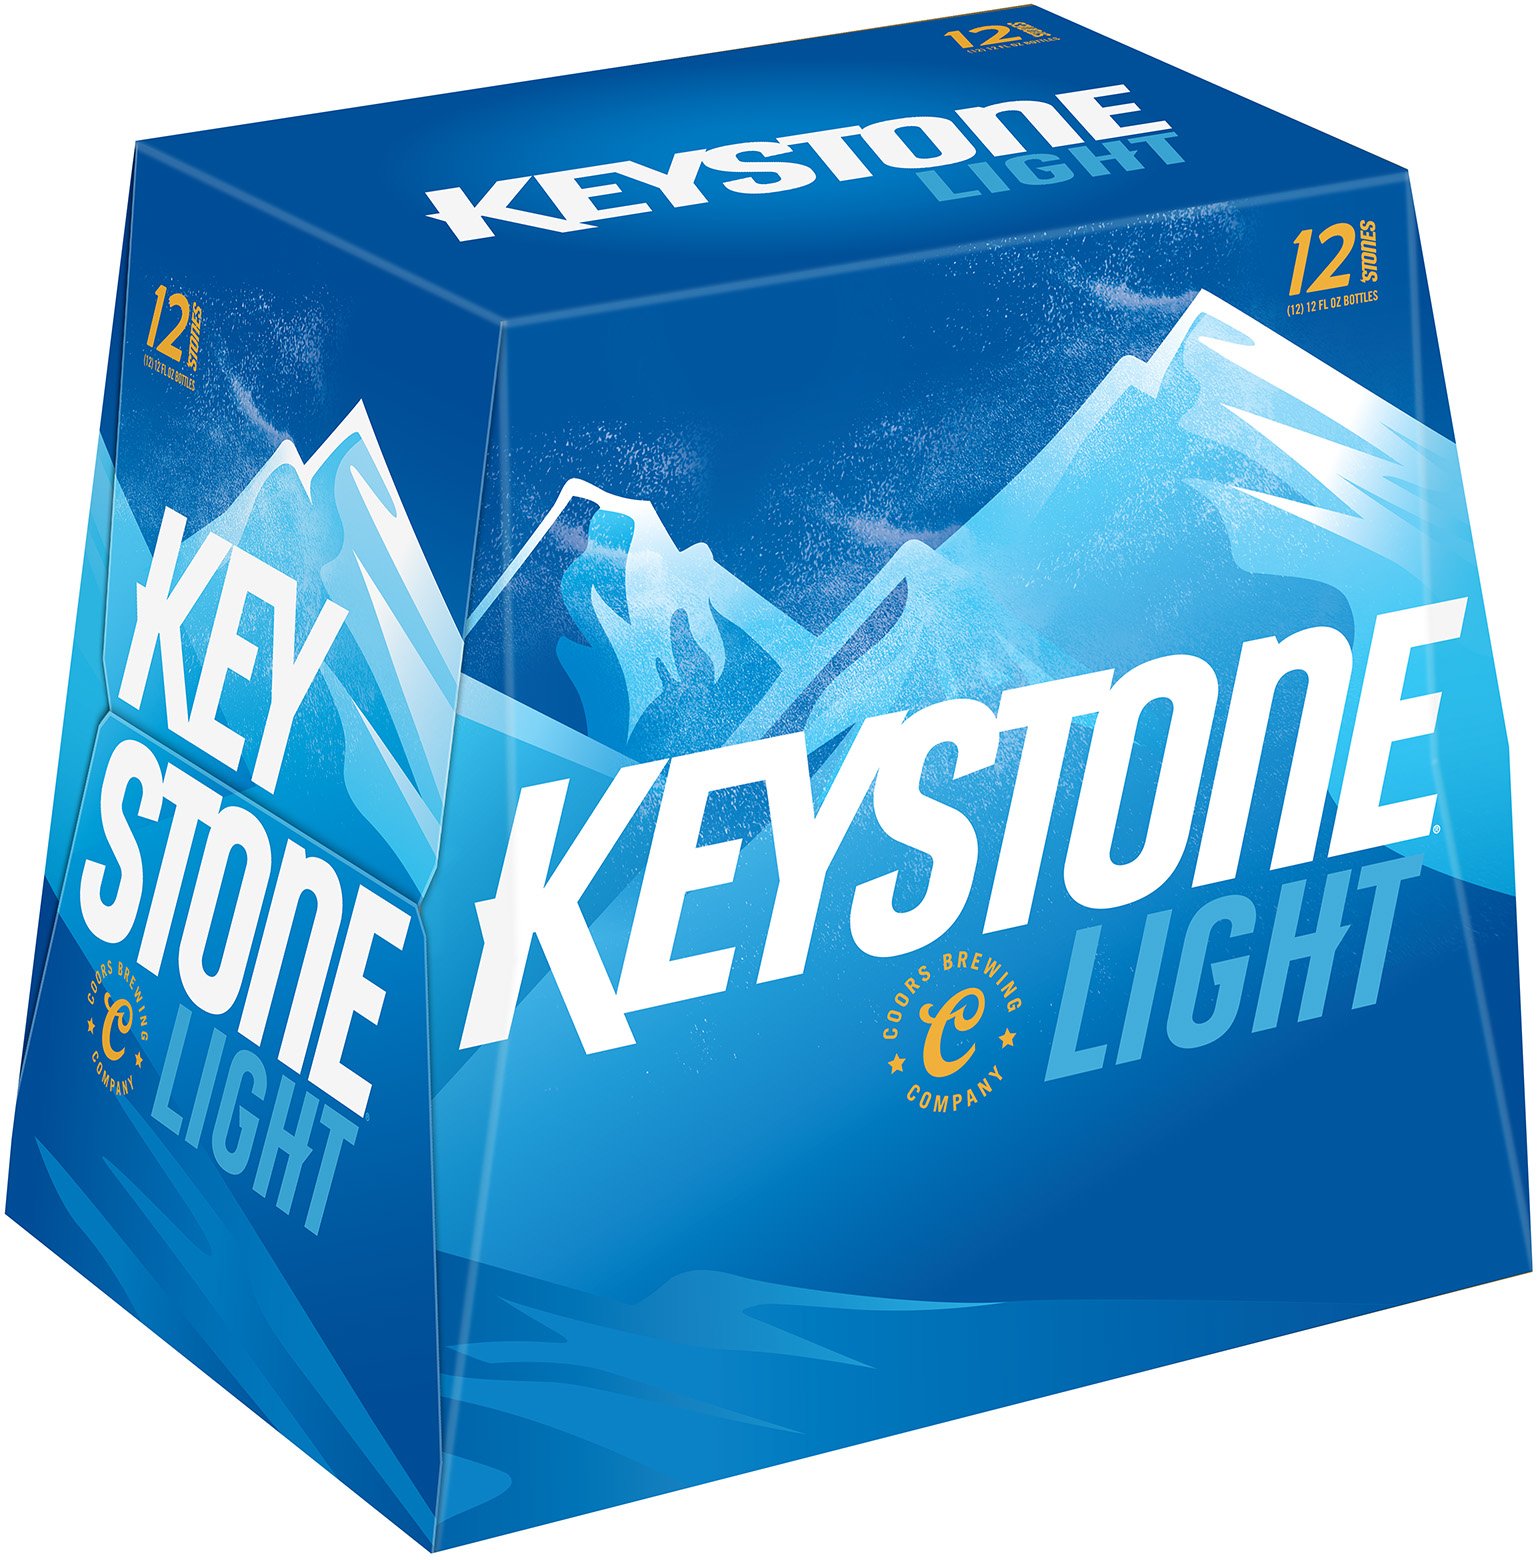 Keystone Light Beer 12 oz Bottles - Beer